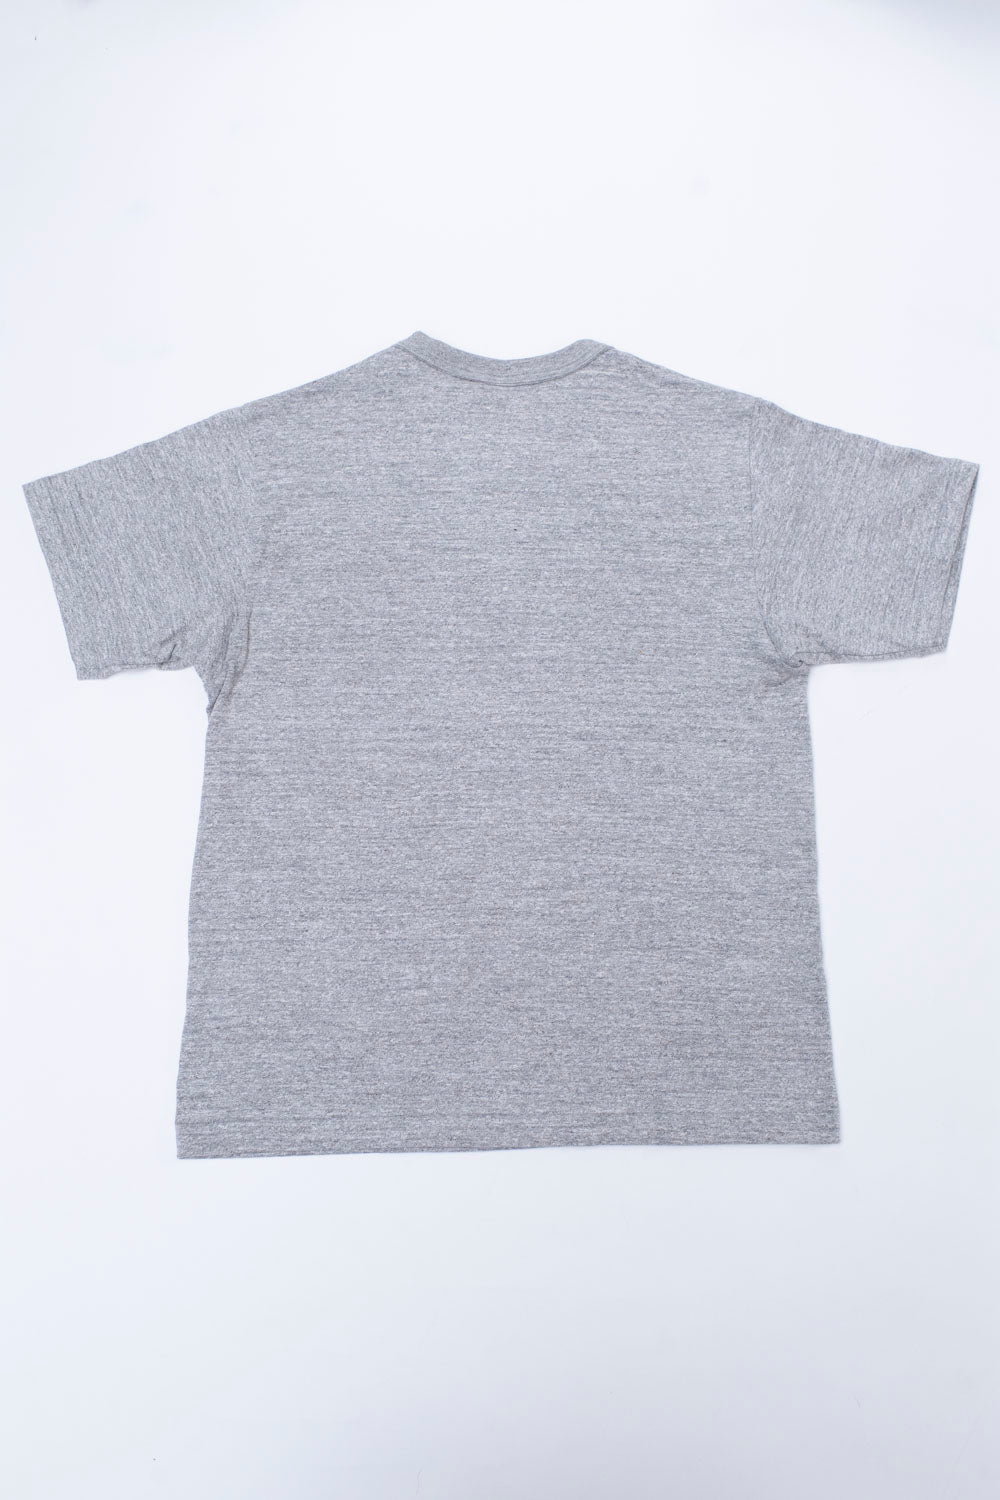 Lot 4601P - Slubby Cotton Pocket T-Shirt - Heather Grey